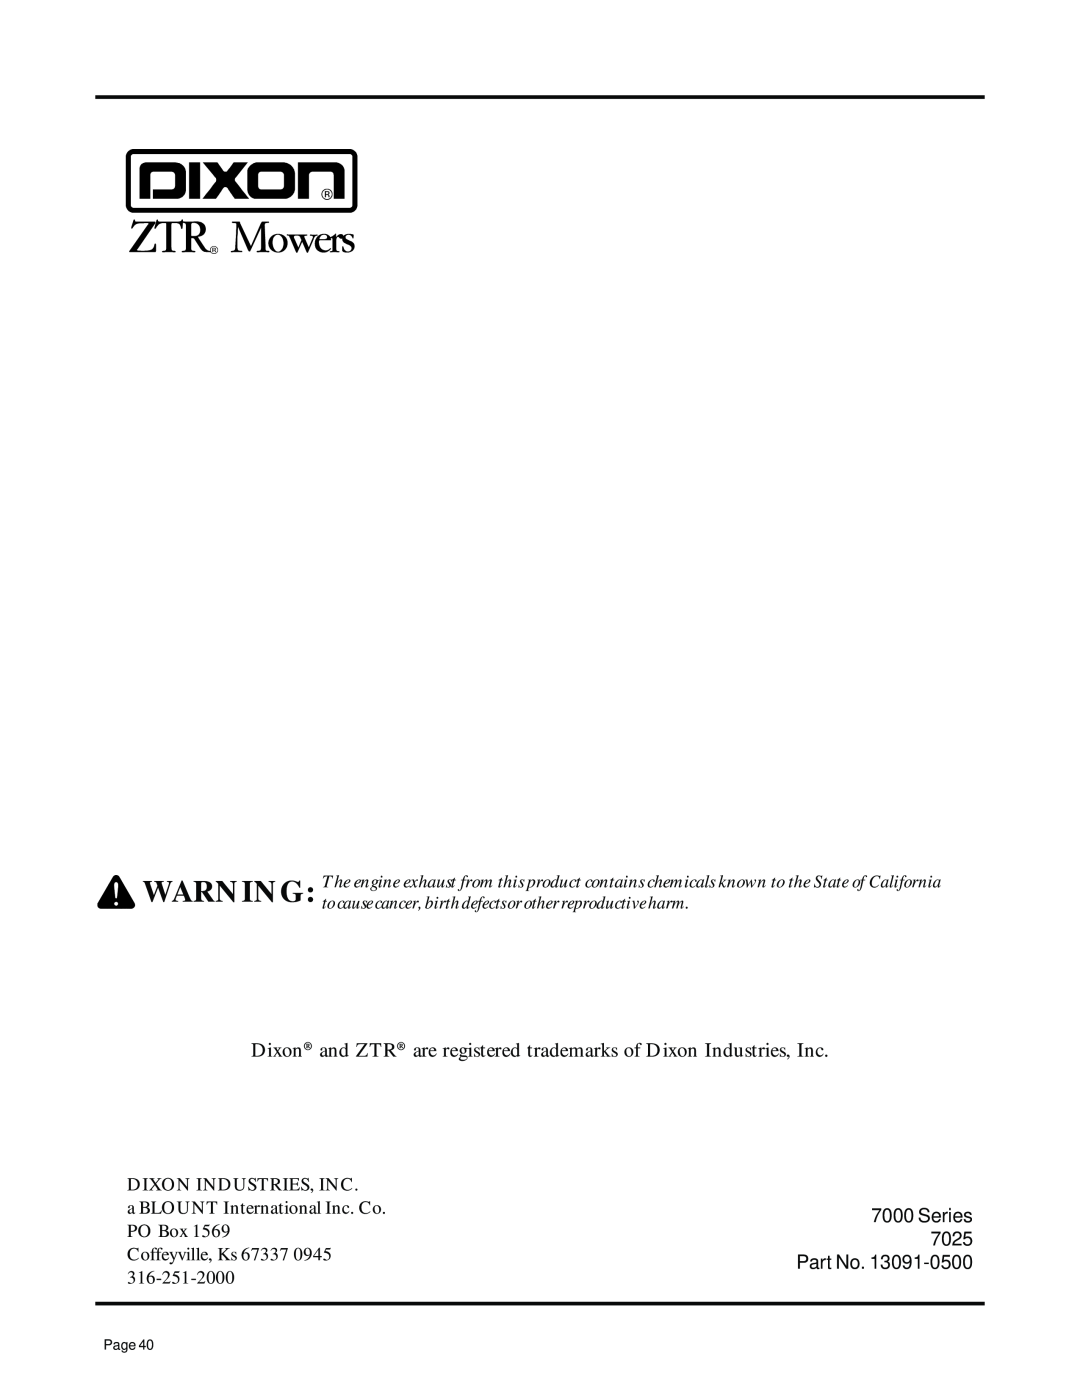 Dixon ZTR 7025 Dixon and ZTR are registered trademarks of Dixon Industries, Inc, a BLOUNT International Inc. Co, PO Box 